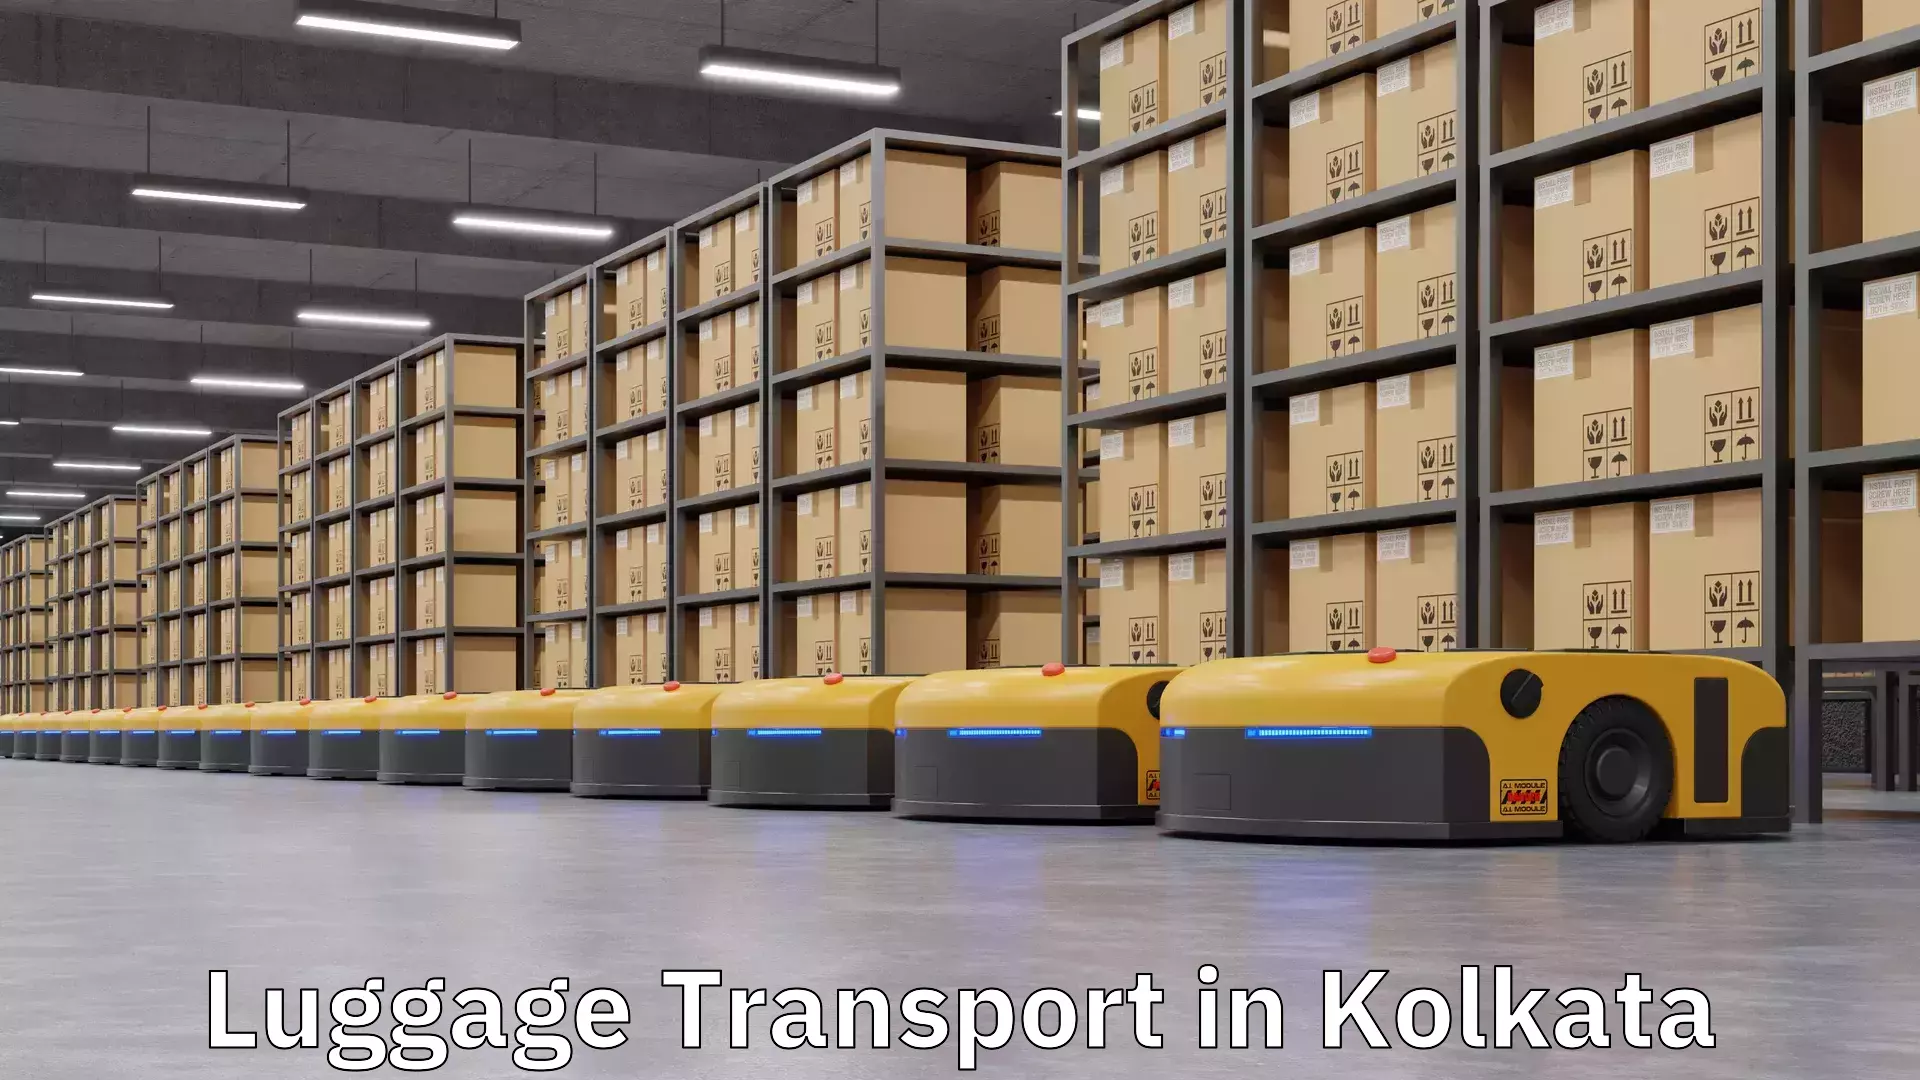 Luggage transport consultancy in Kolkata